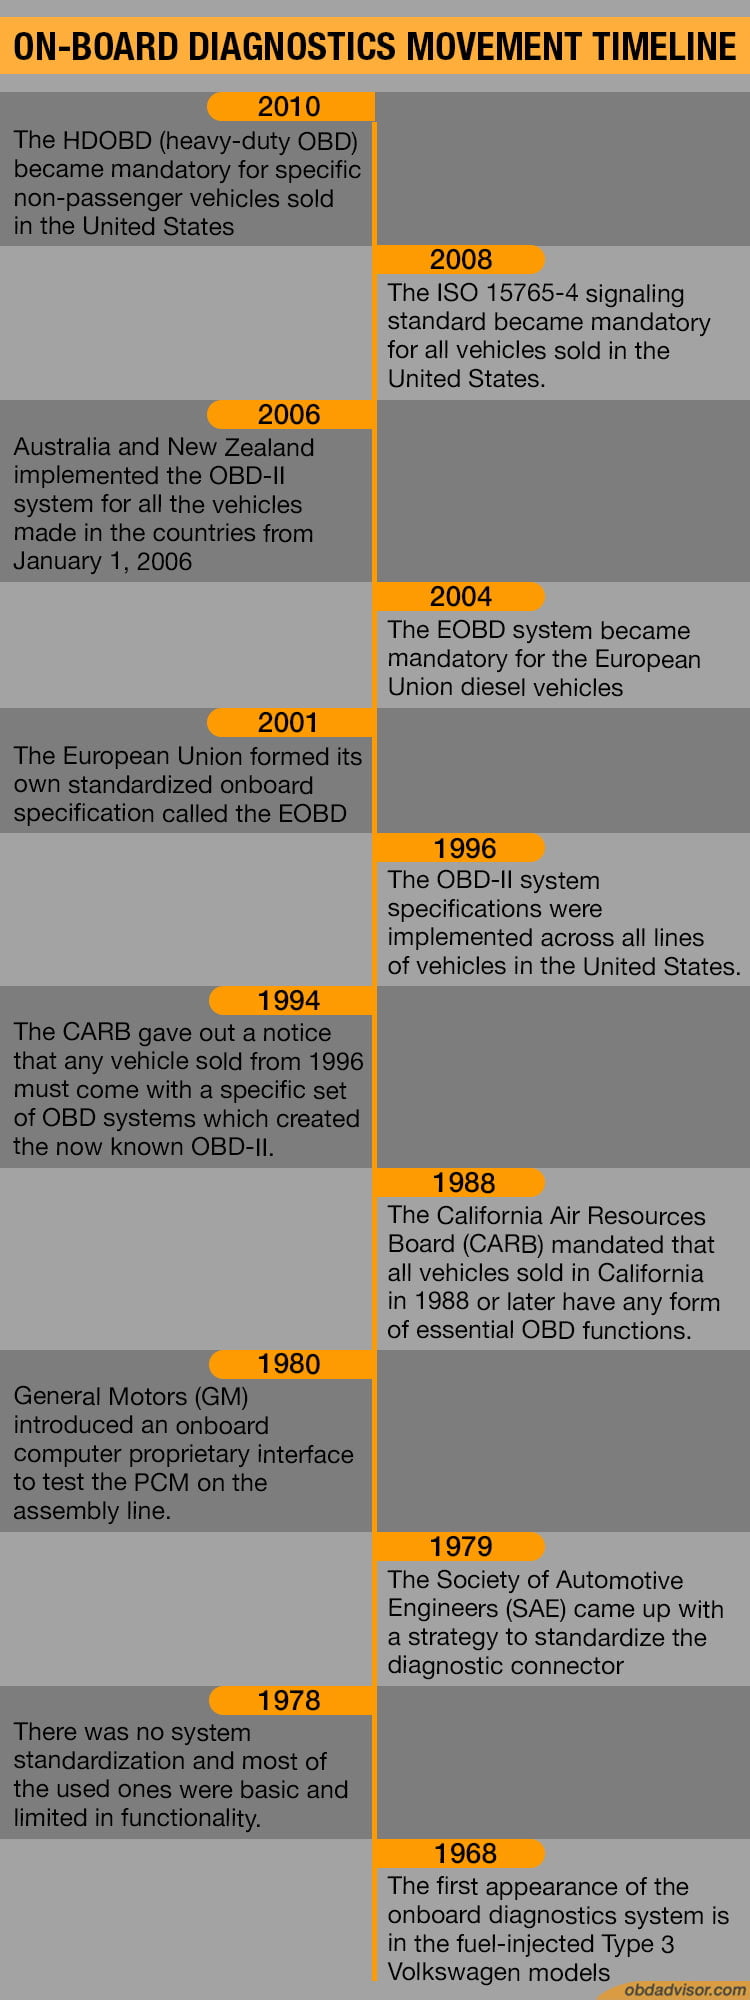 on-board diagnostics history timeline